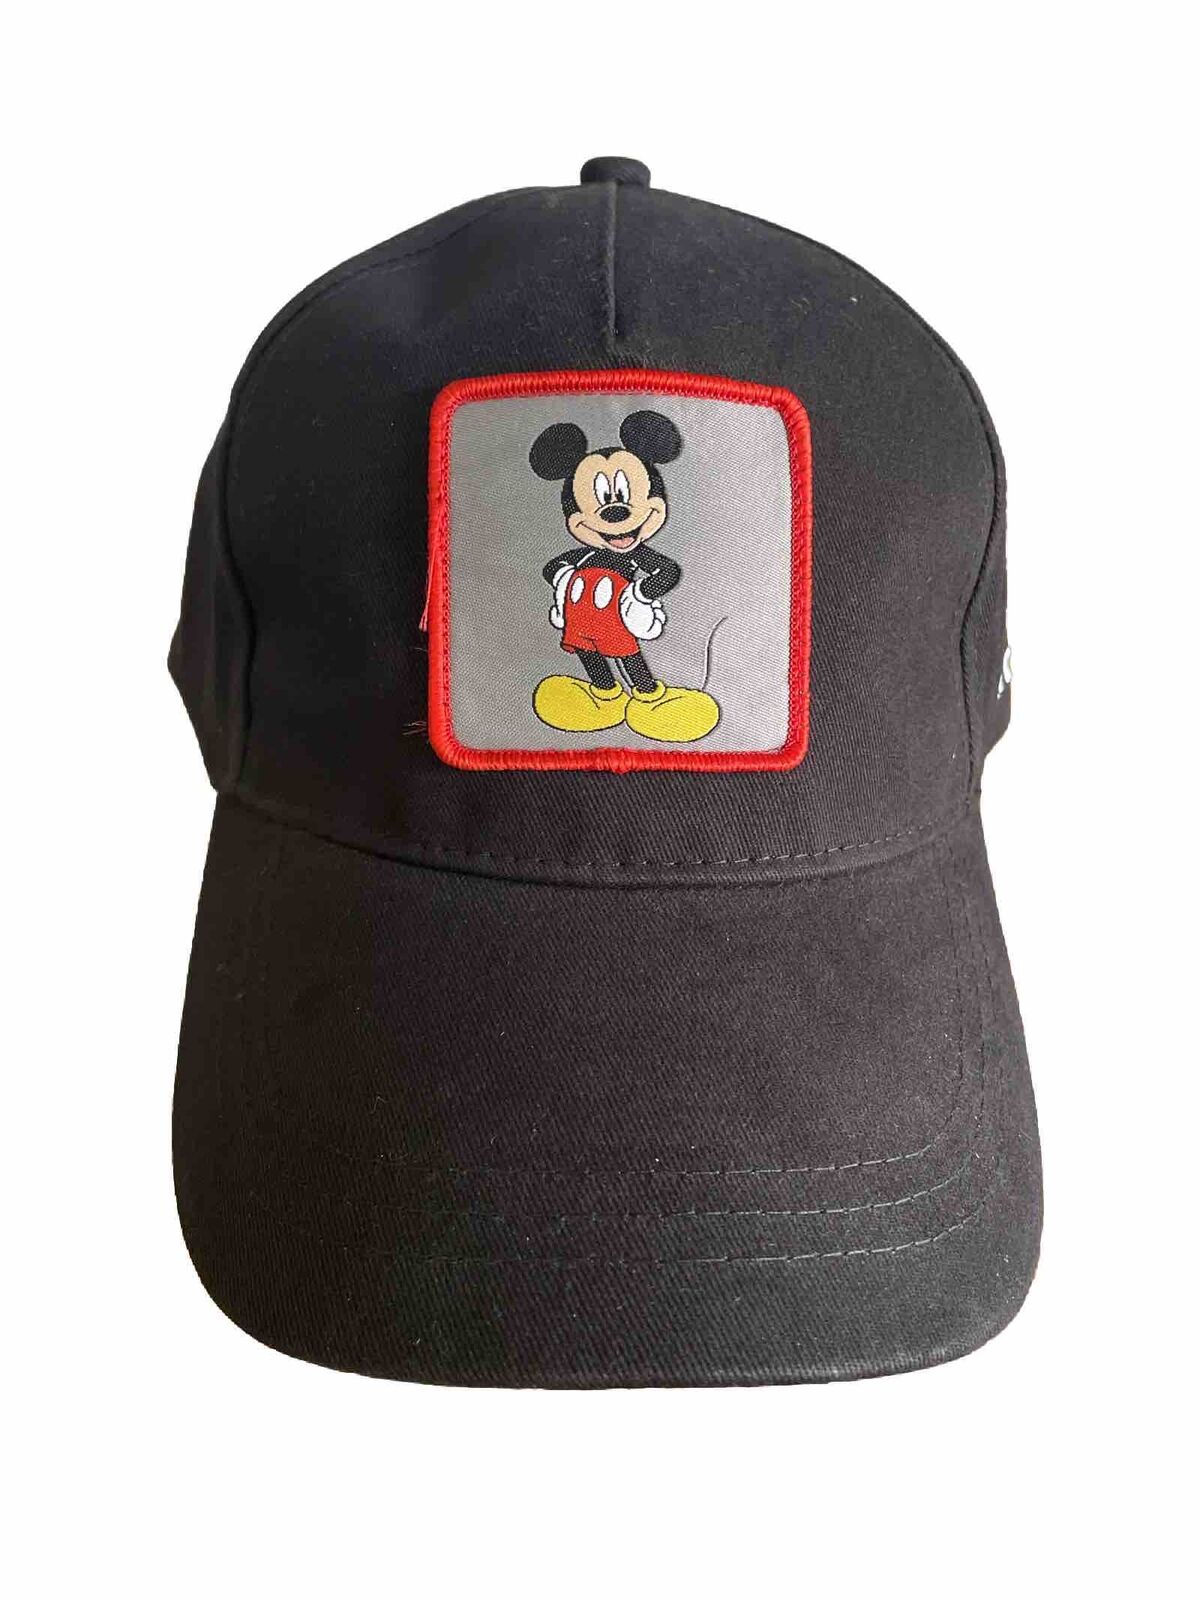 Mickey Mouse black baseball cap NWT (adult)